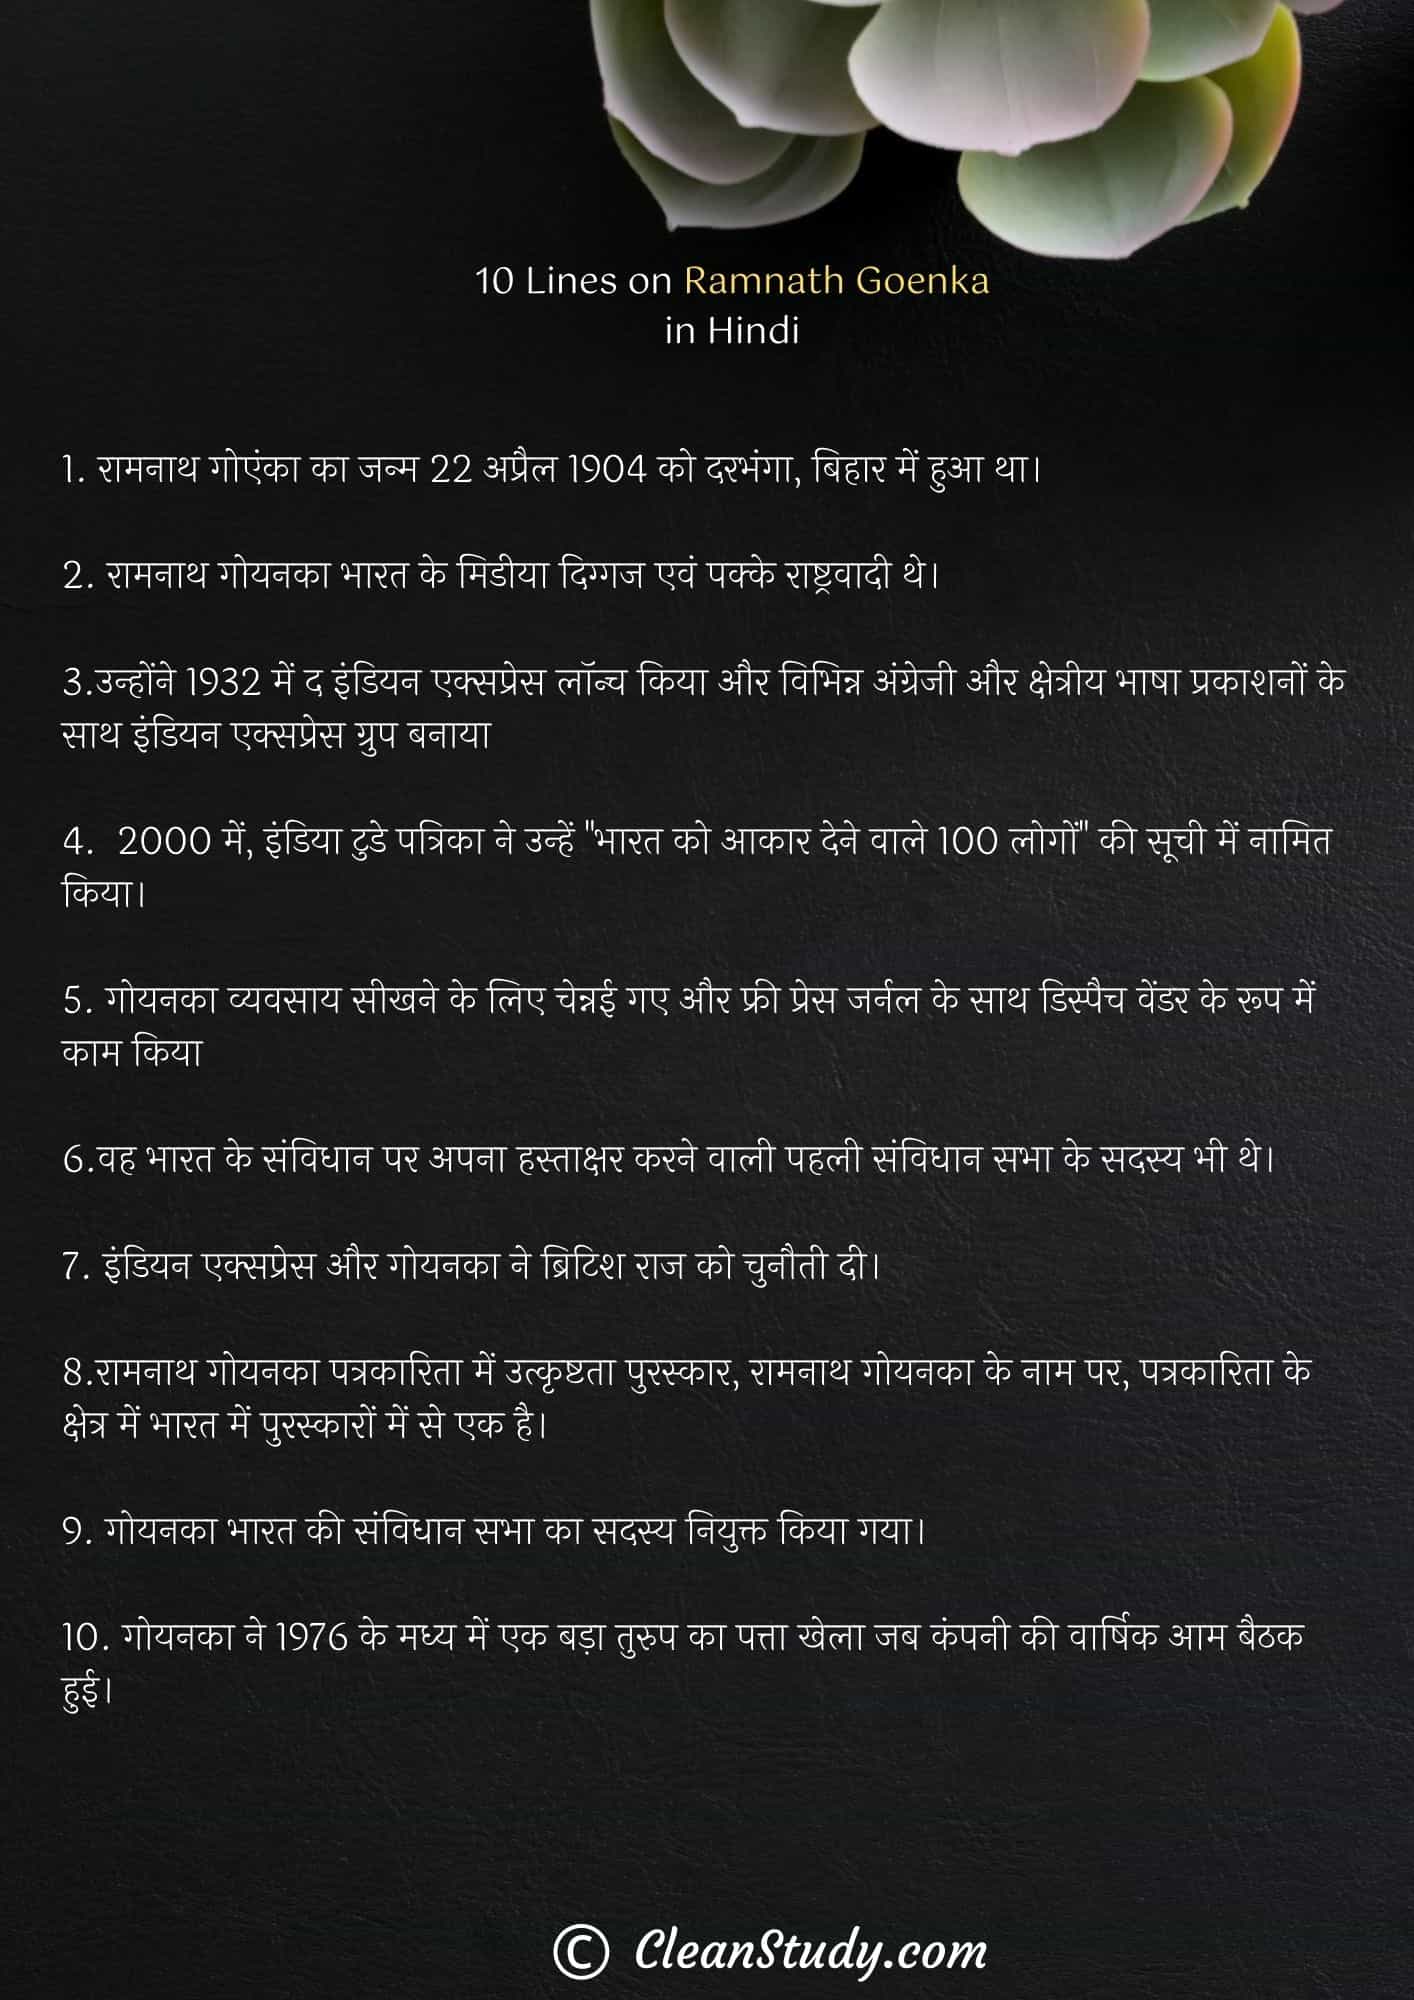 10 Lines on Ramnath Goenka in Hindi